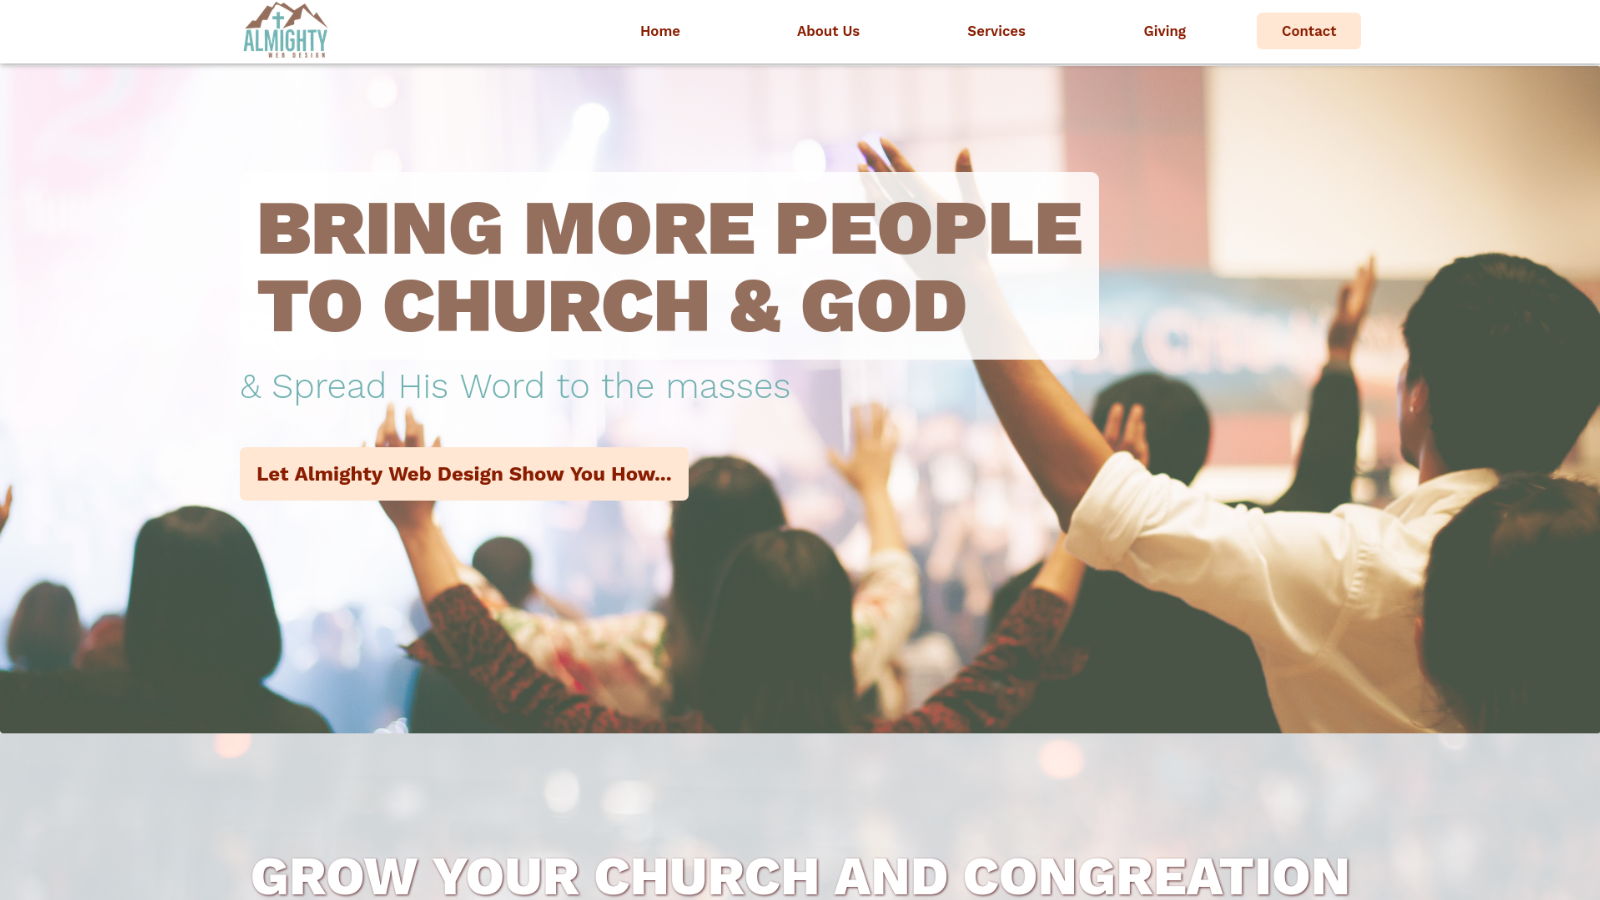 Almighty Web Design website designed and developed by SnowCrest Digital